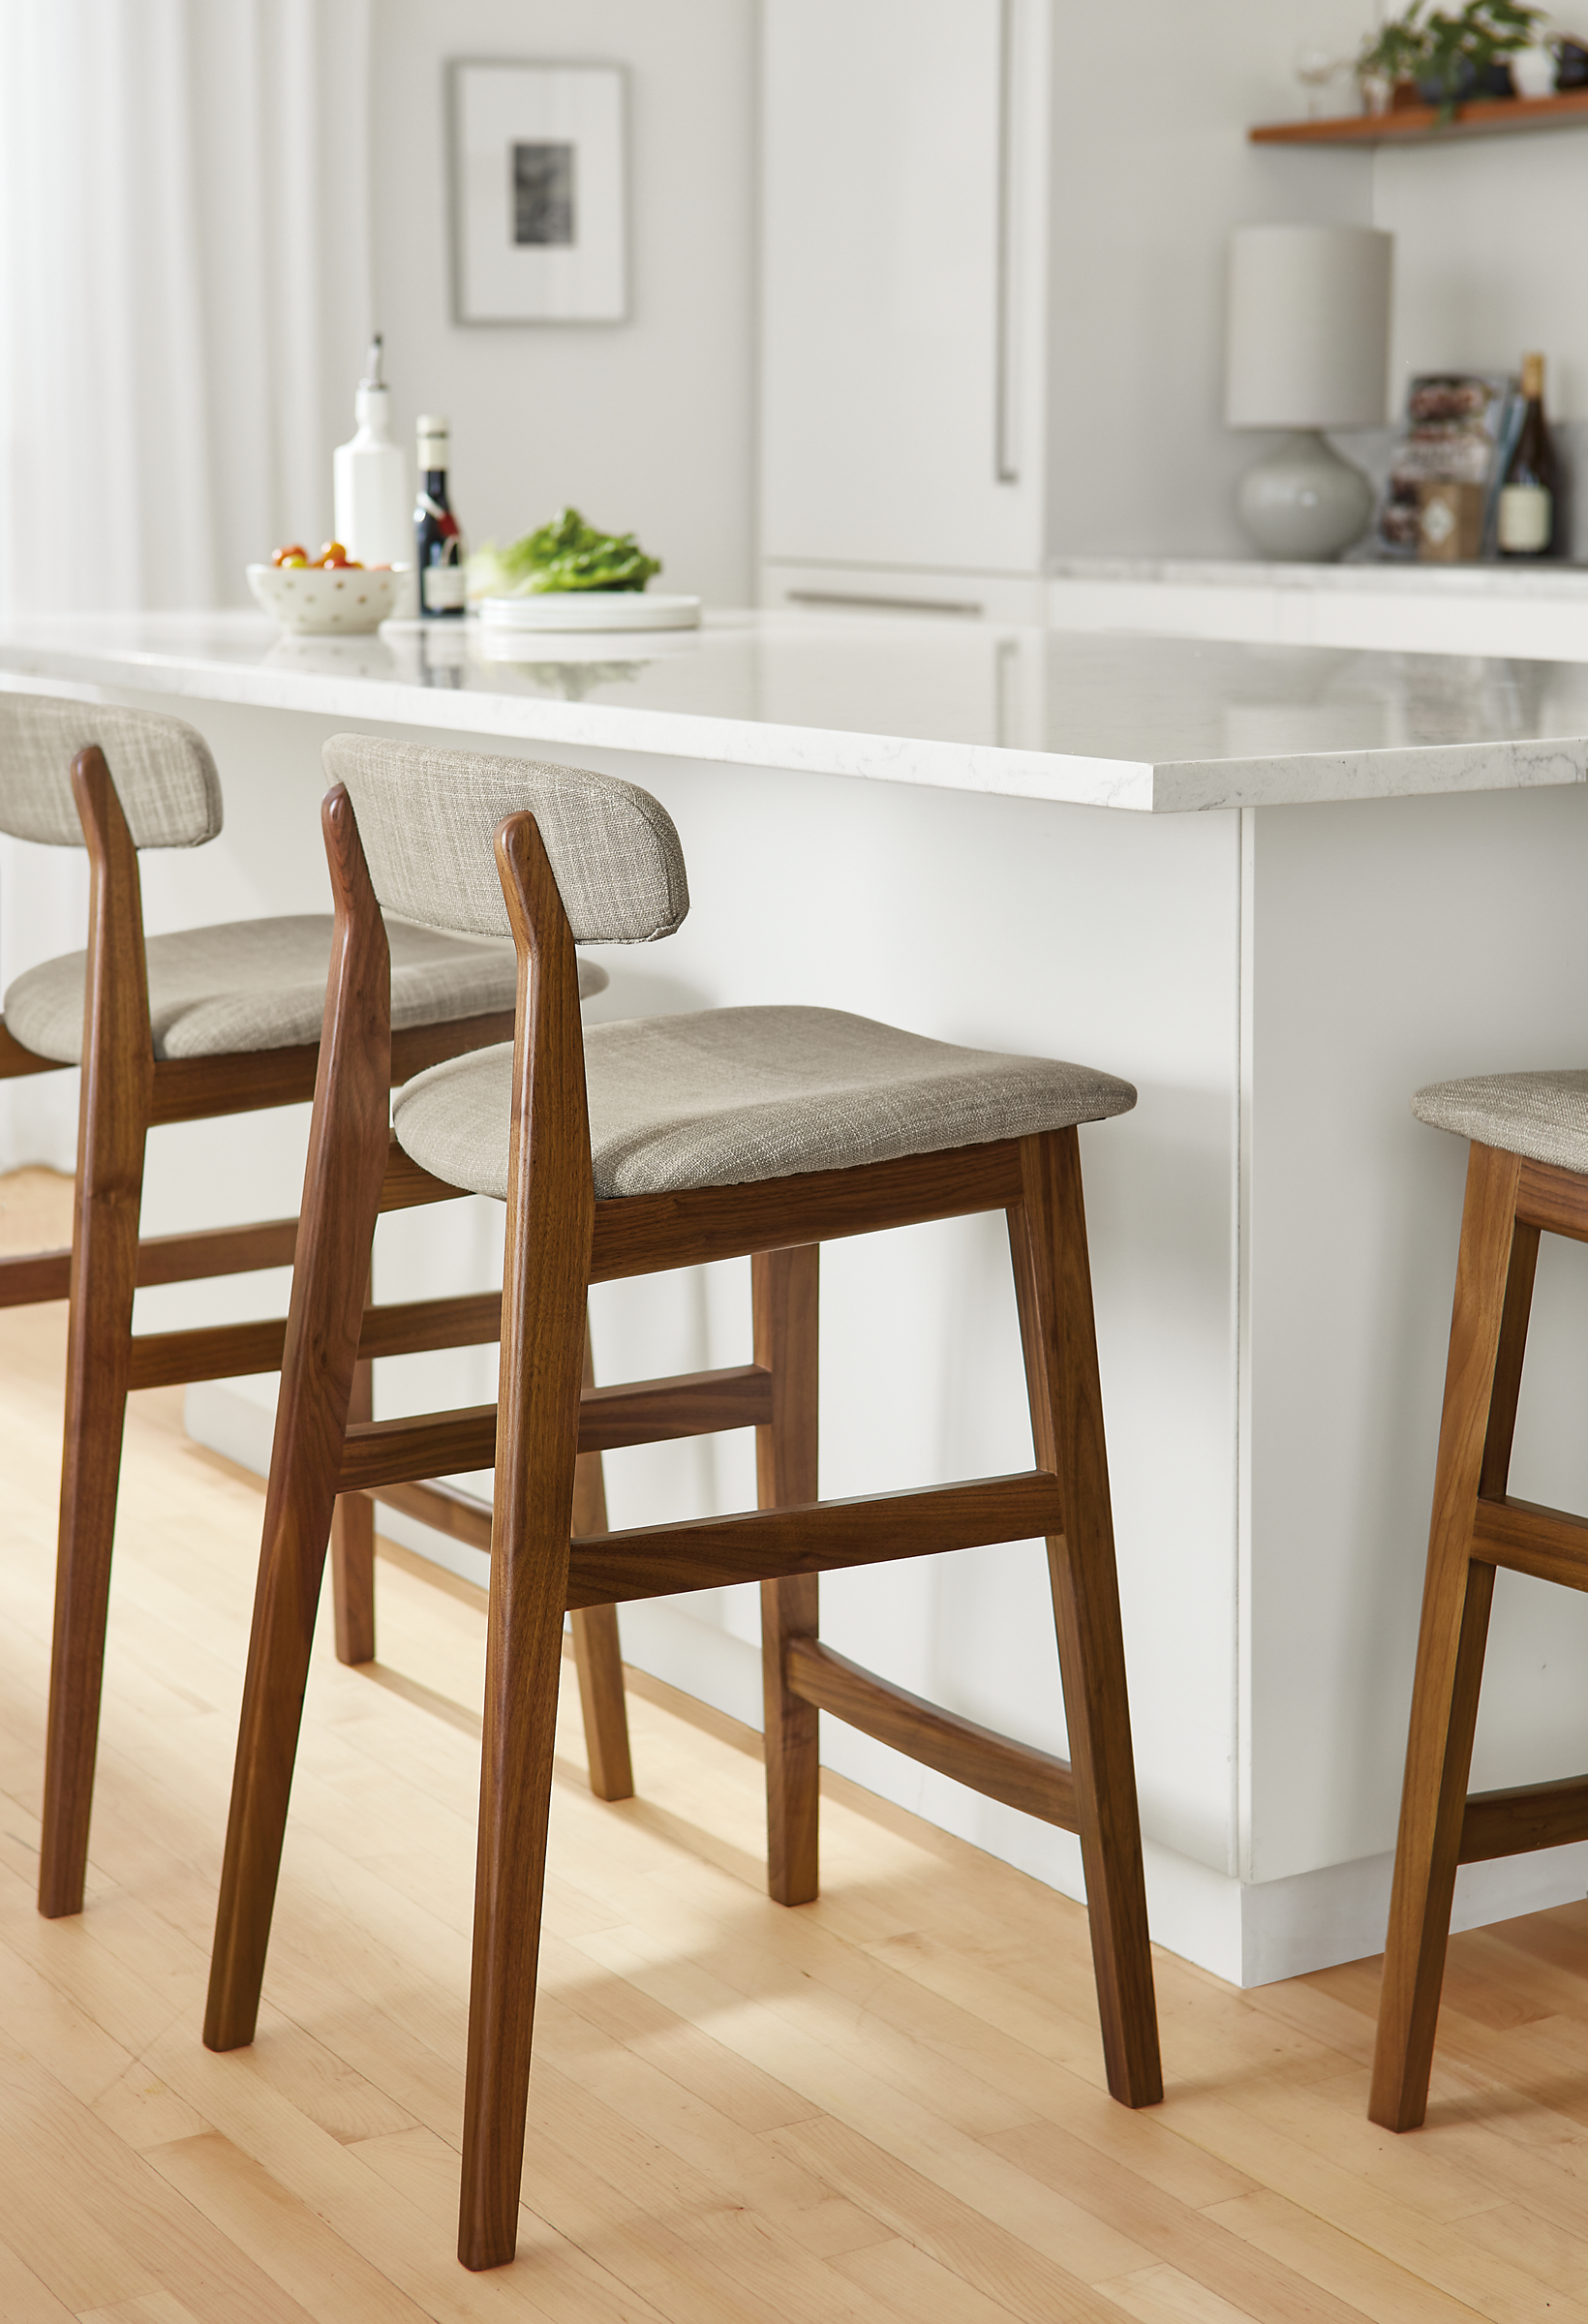 detail of errol counter stools at kitchen island